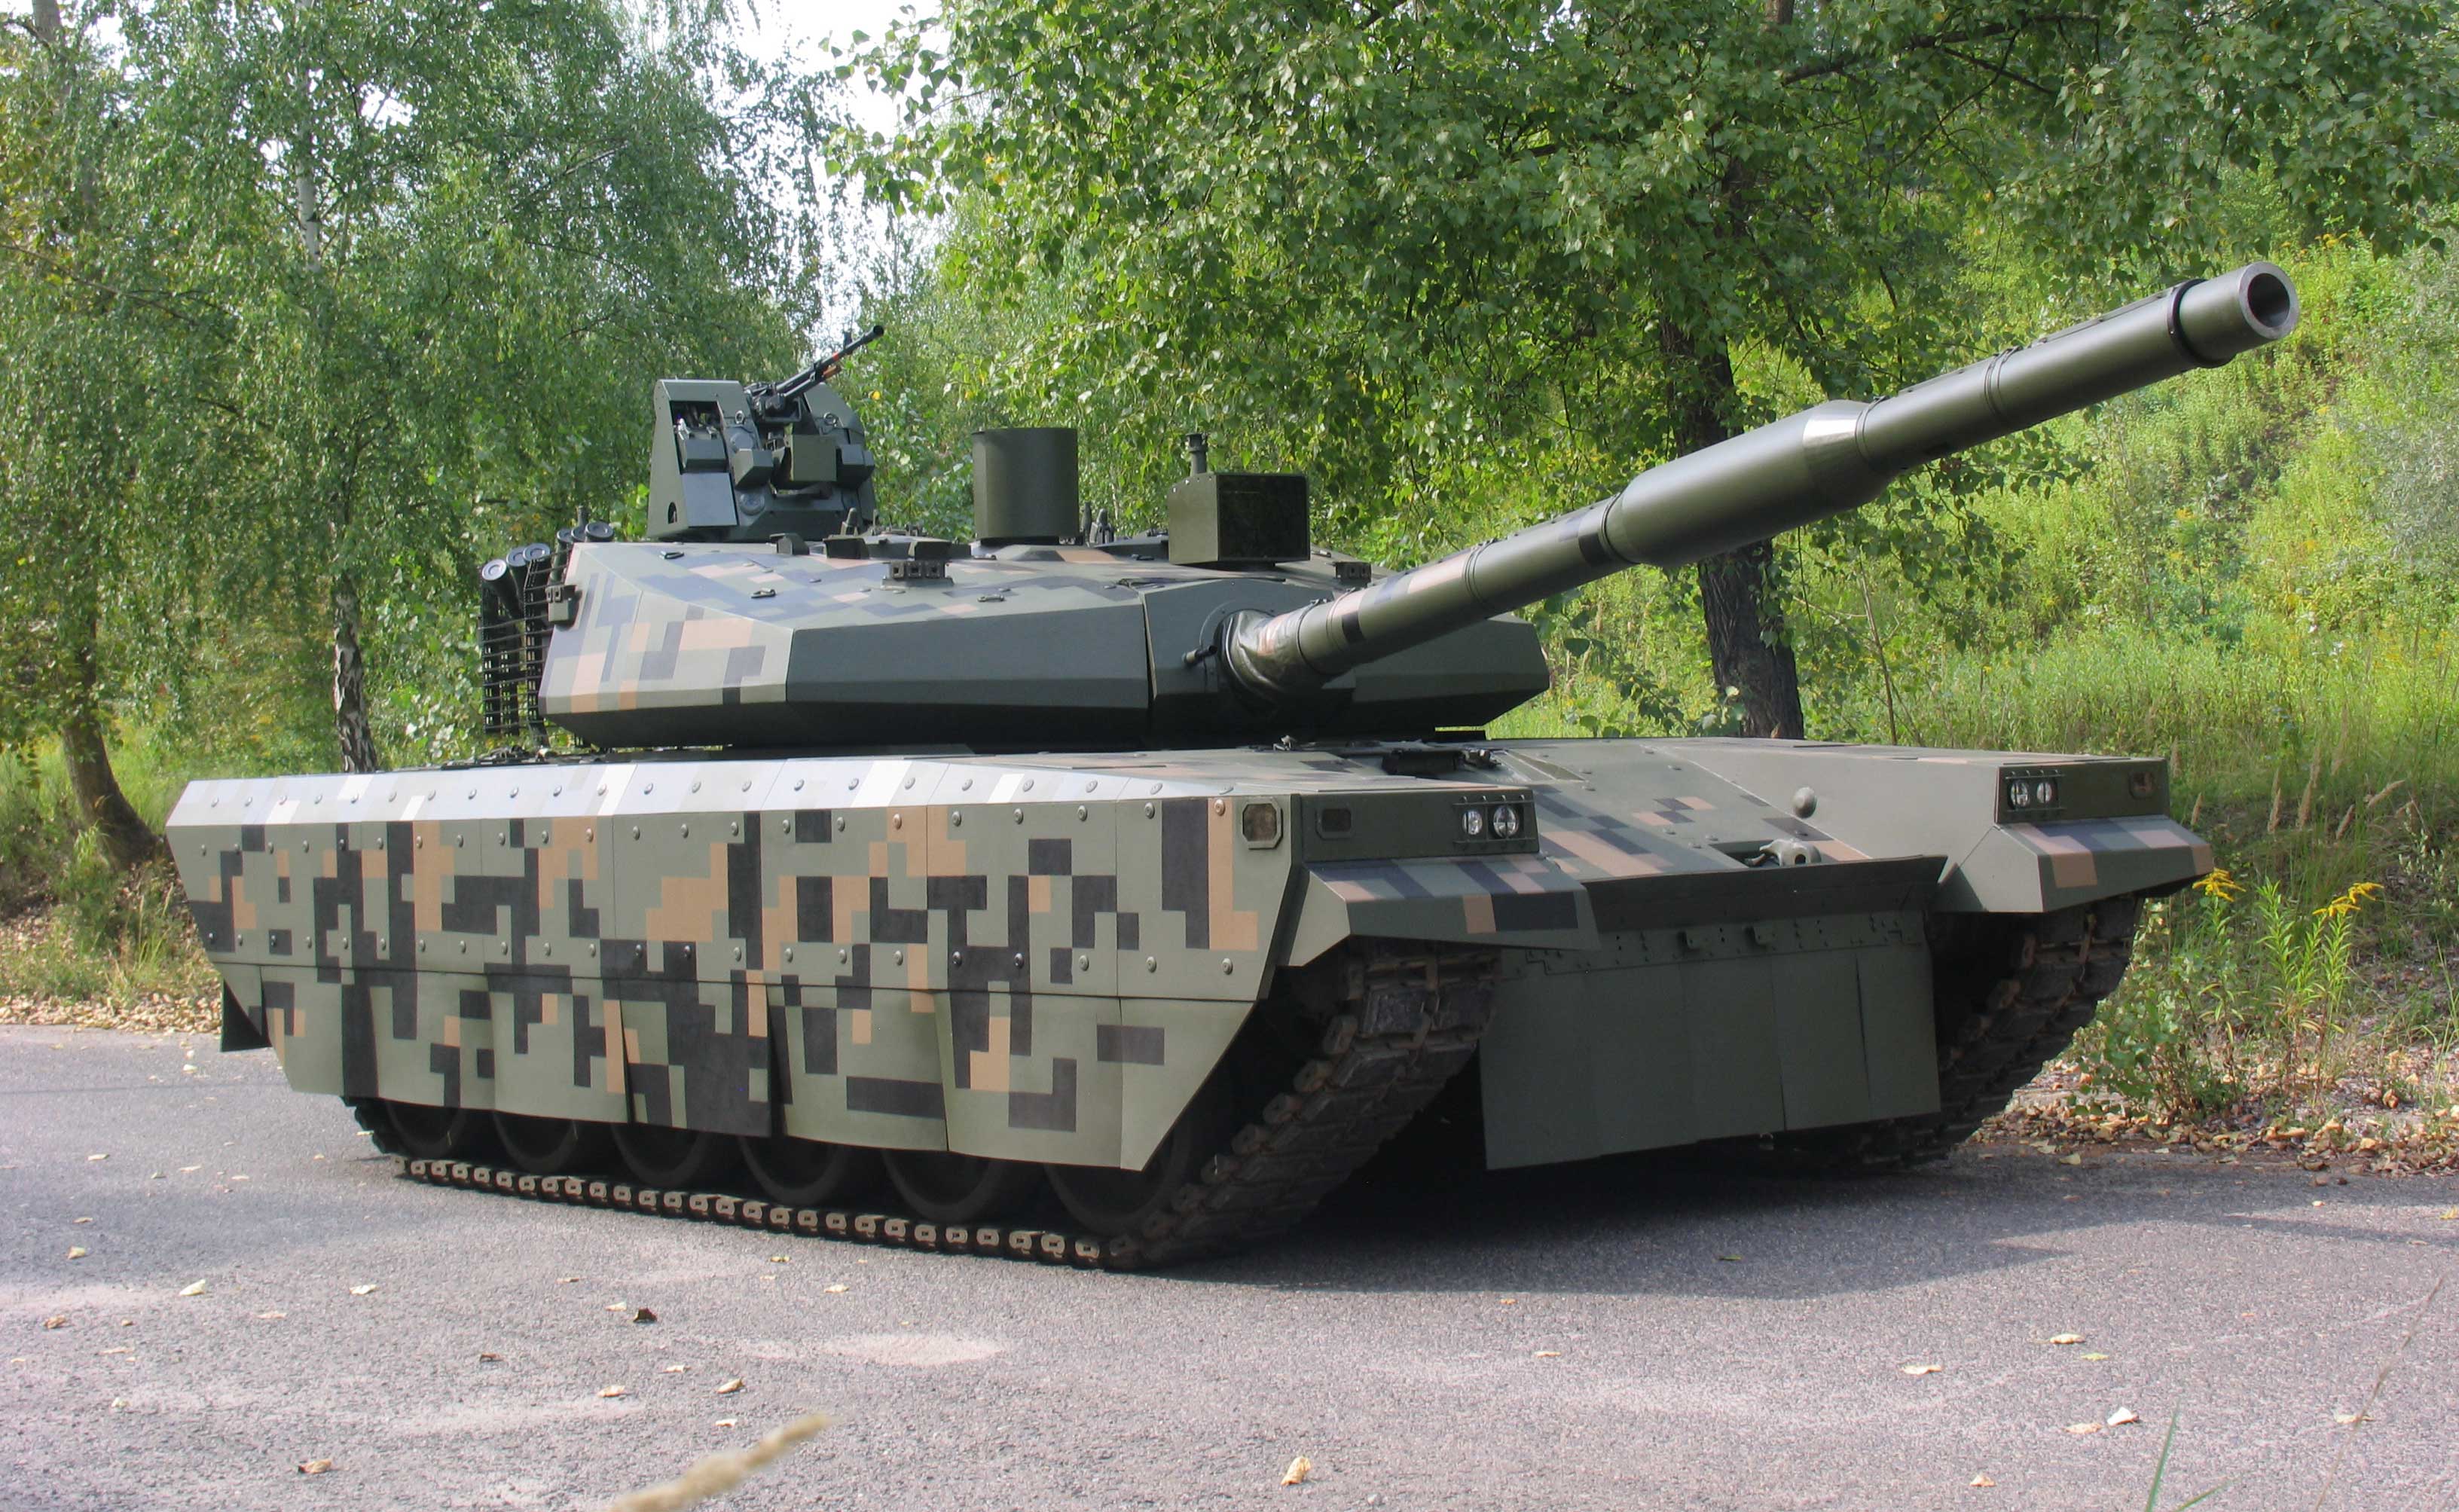 Tank tune. Польский танк pt 16. Танк польский pt-17. Польские танки pt-91 twardy. Leopard pt16.